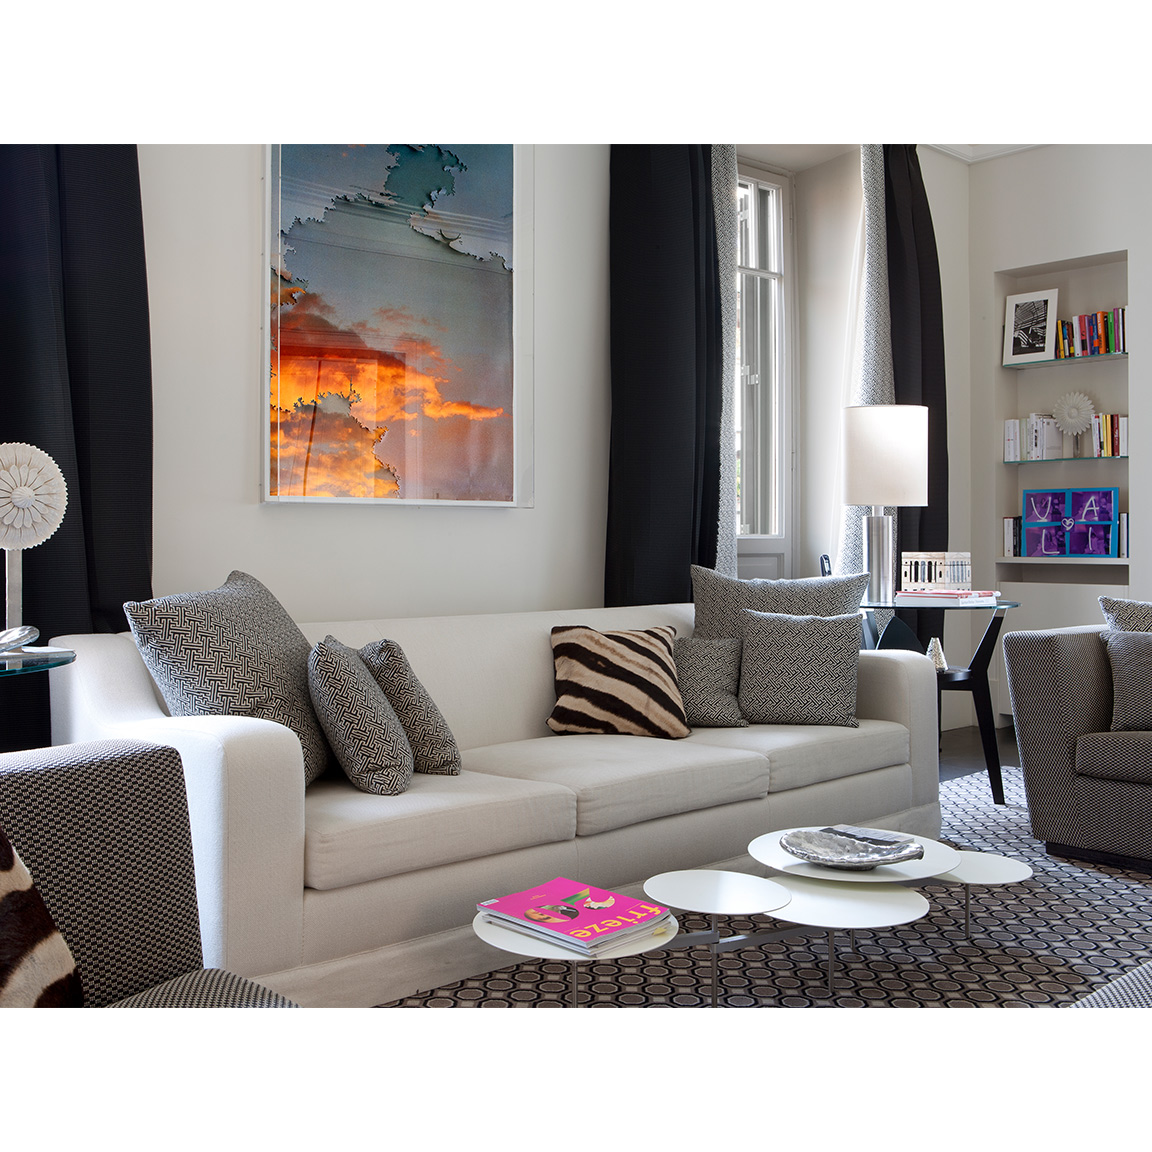 black and white scheme living room